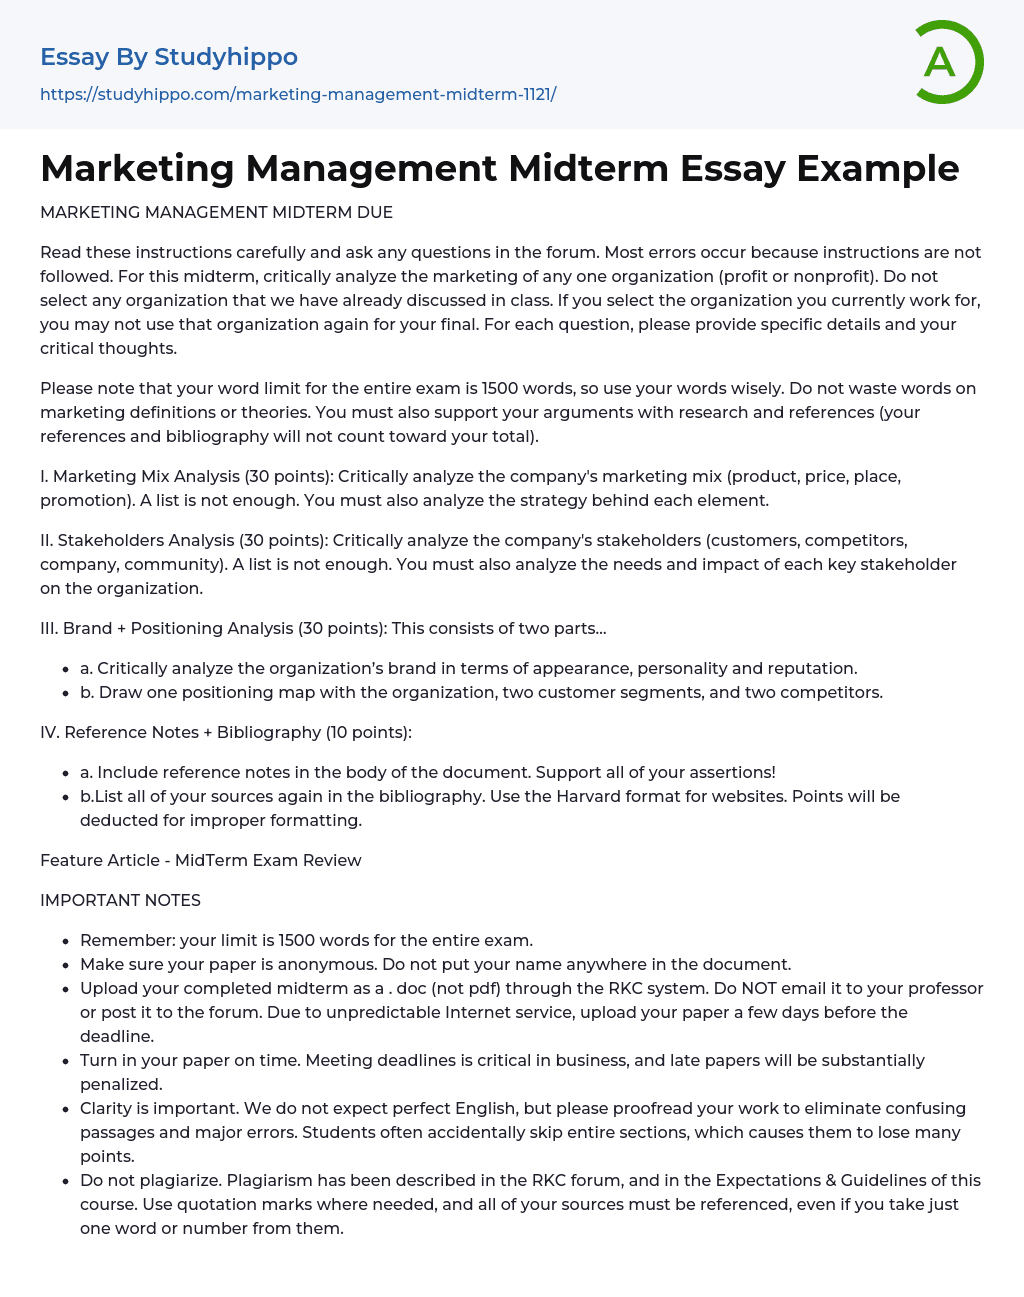 Marketing Management Midterm Essay Example